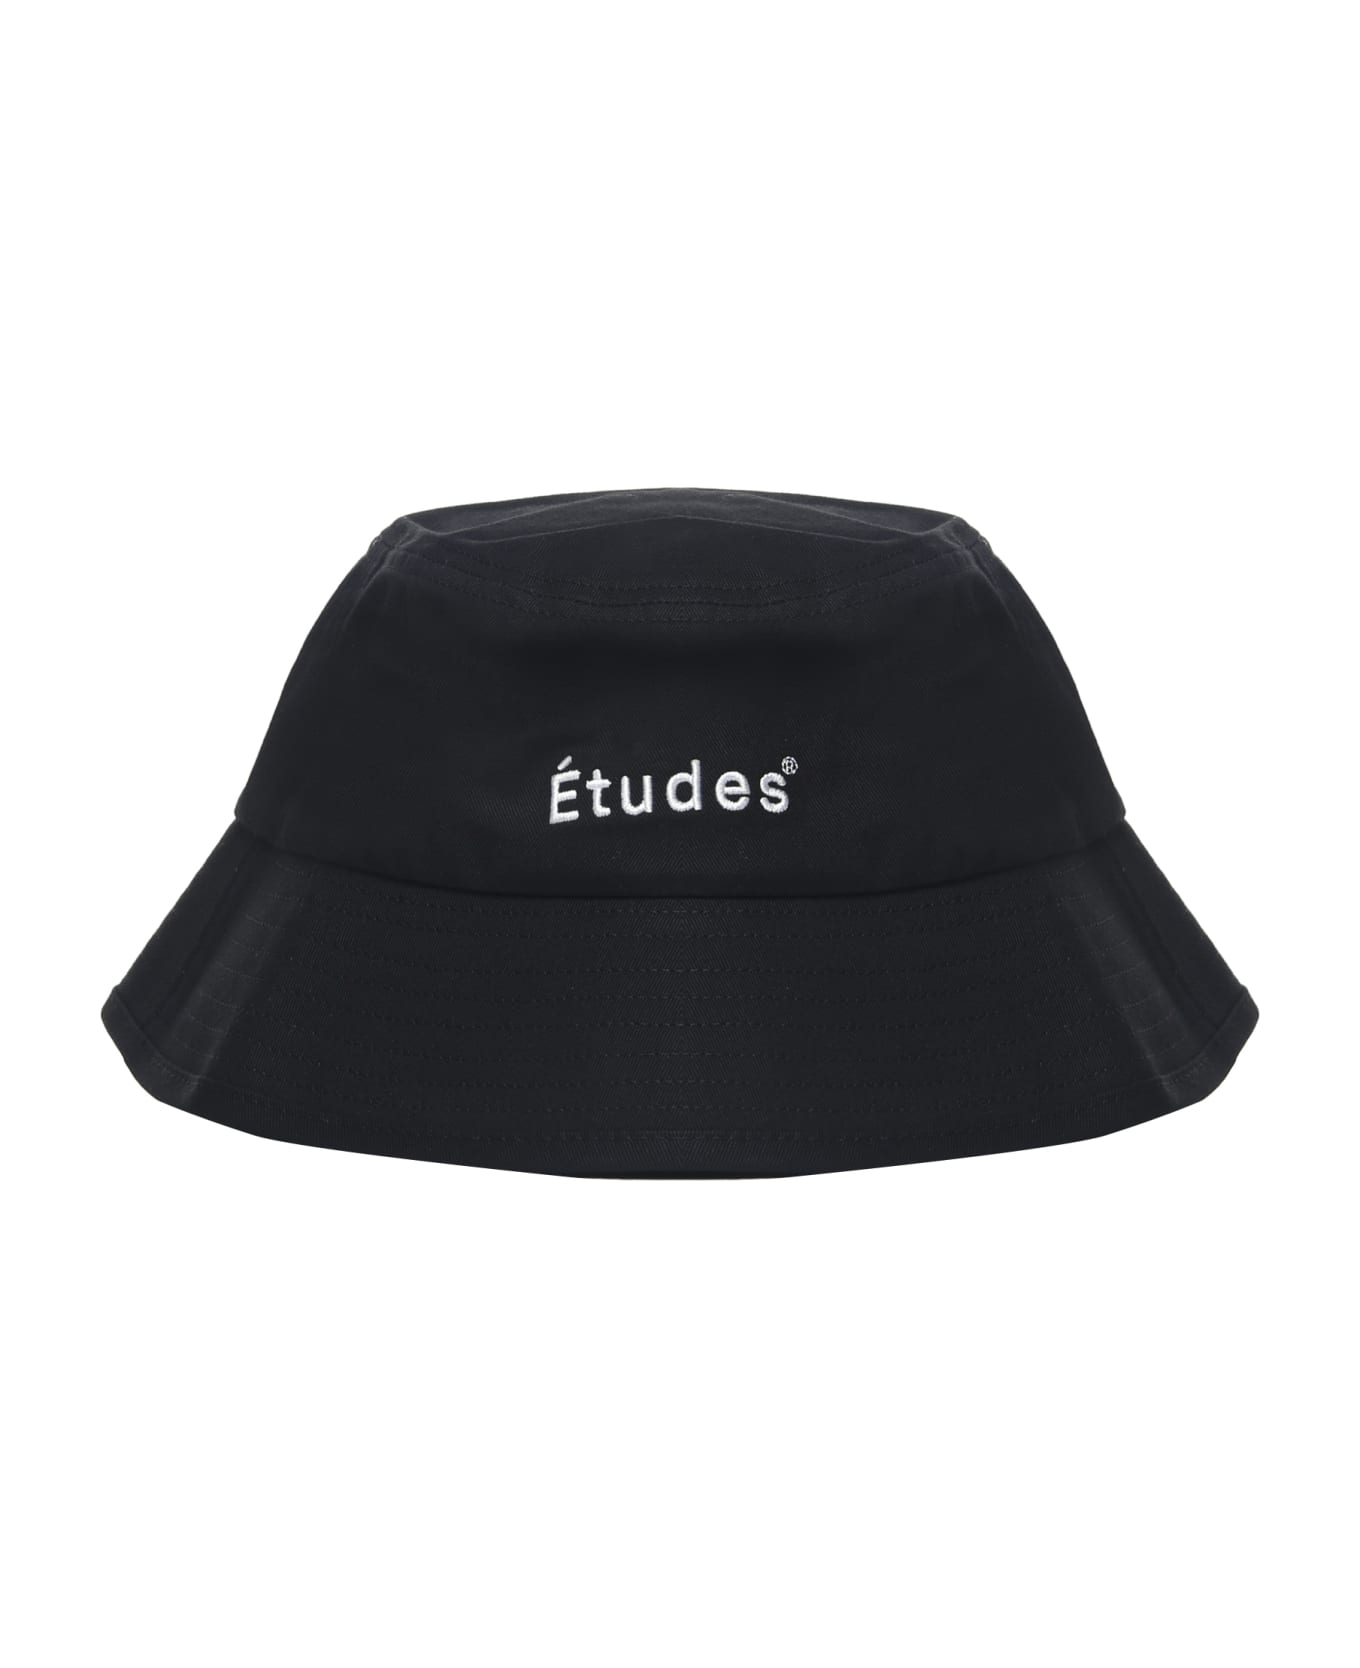 Études Bucket Hat With Logo - Black 帽子